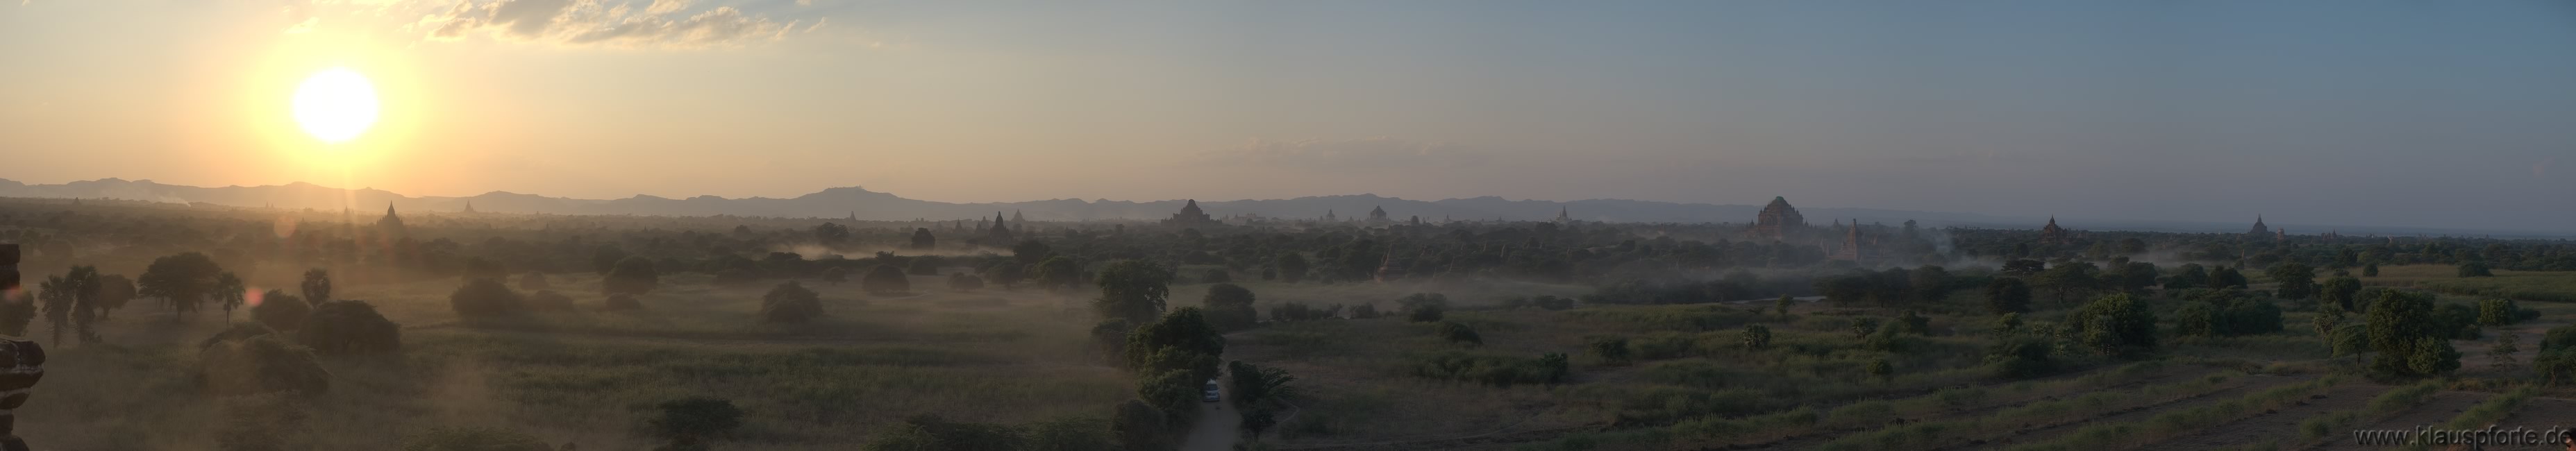 Bagan, Sonnenuntergang